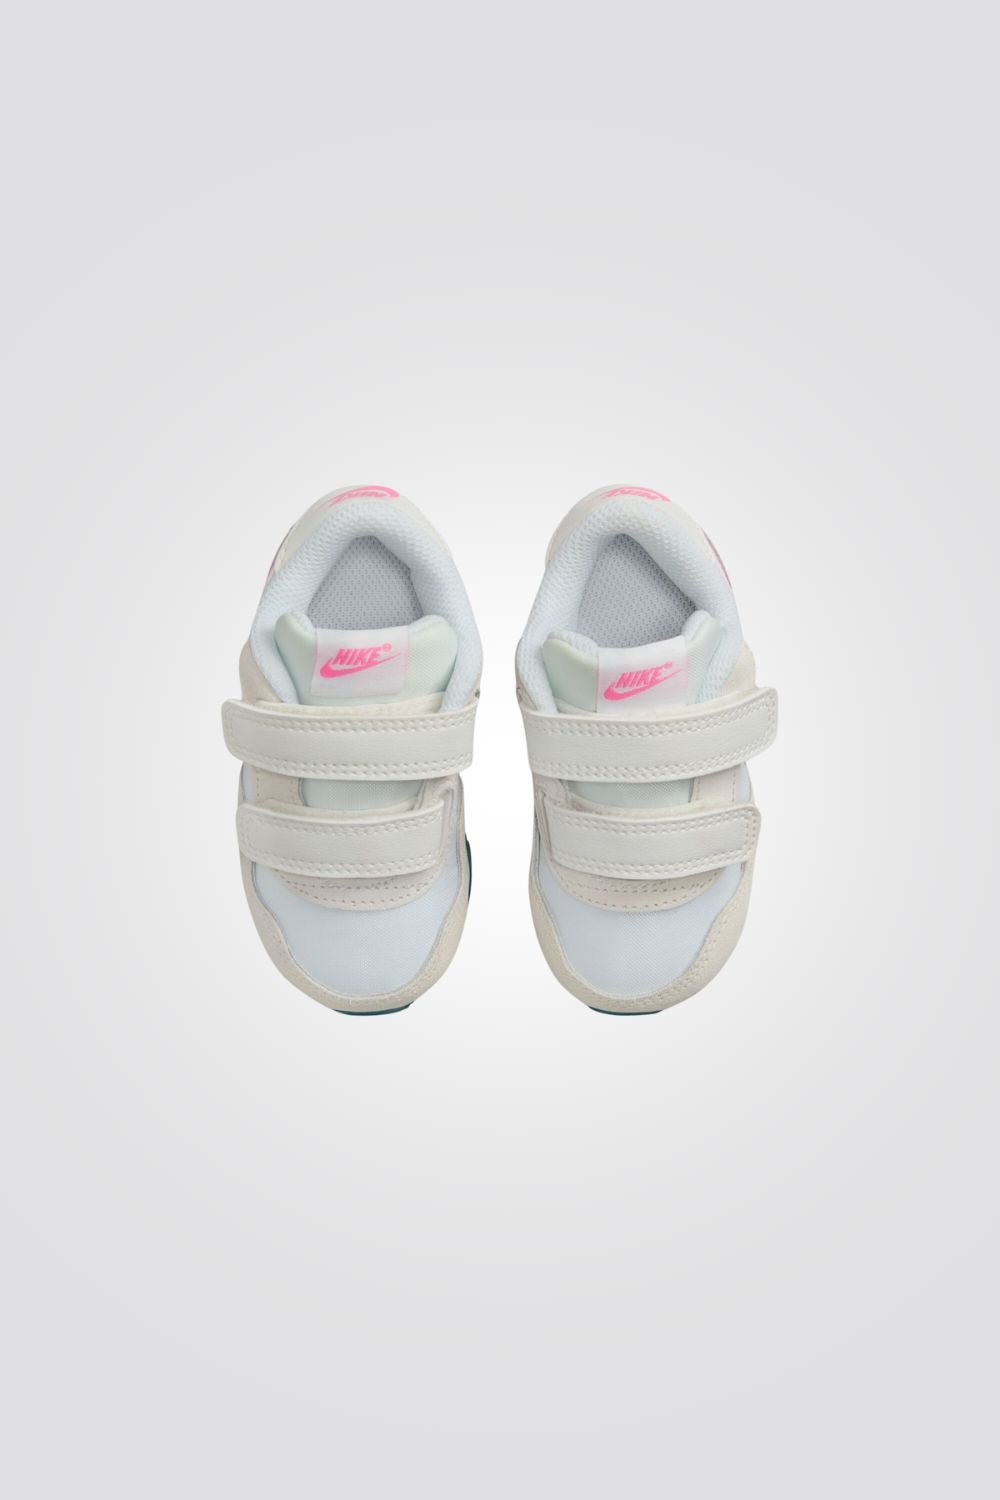 NIKE - נעלי תינוקות MD valiant ורוד לבן - MASHBIR//365